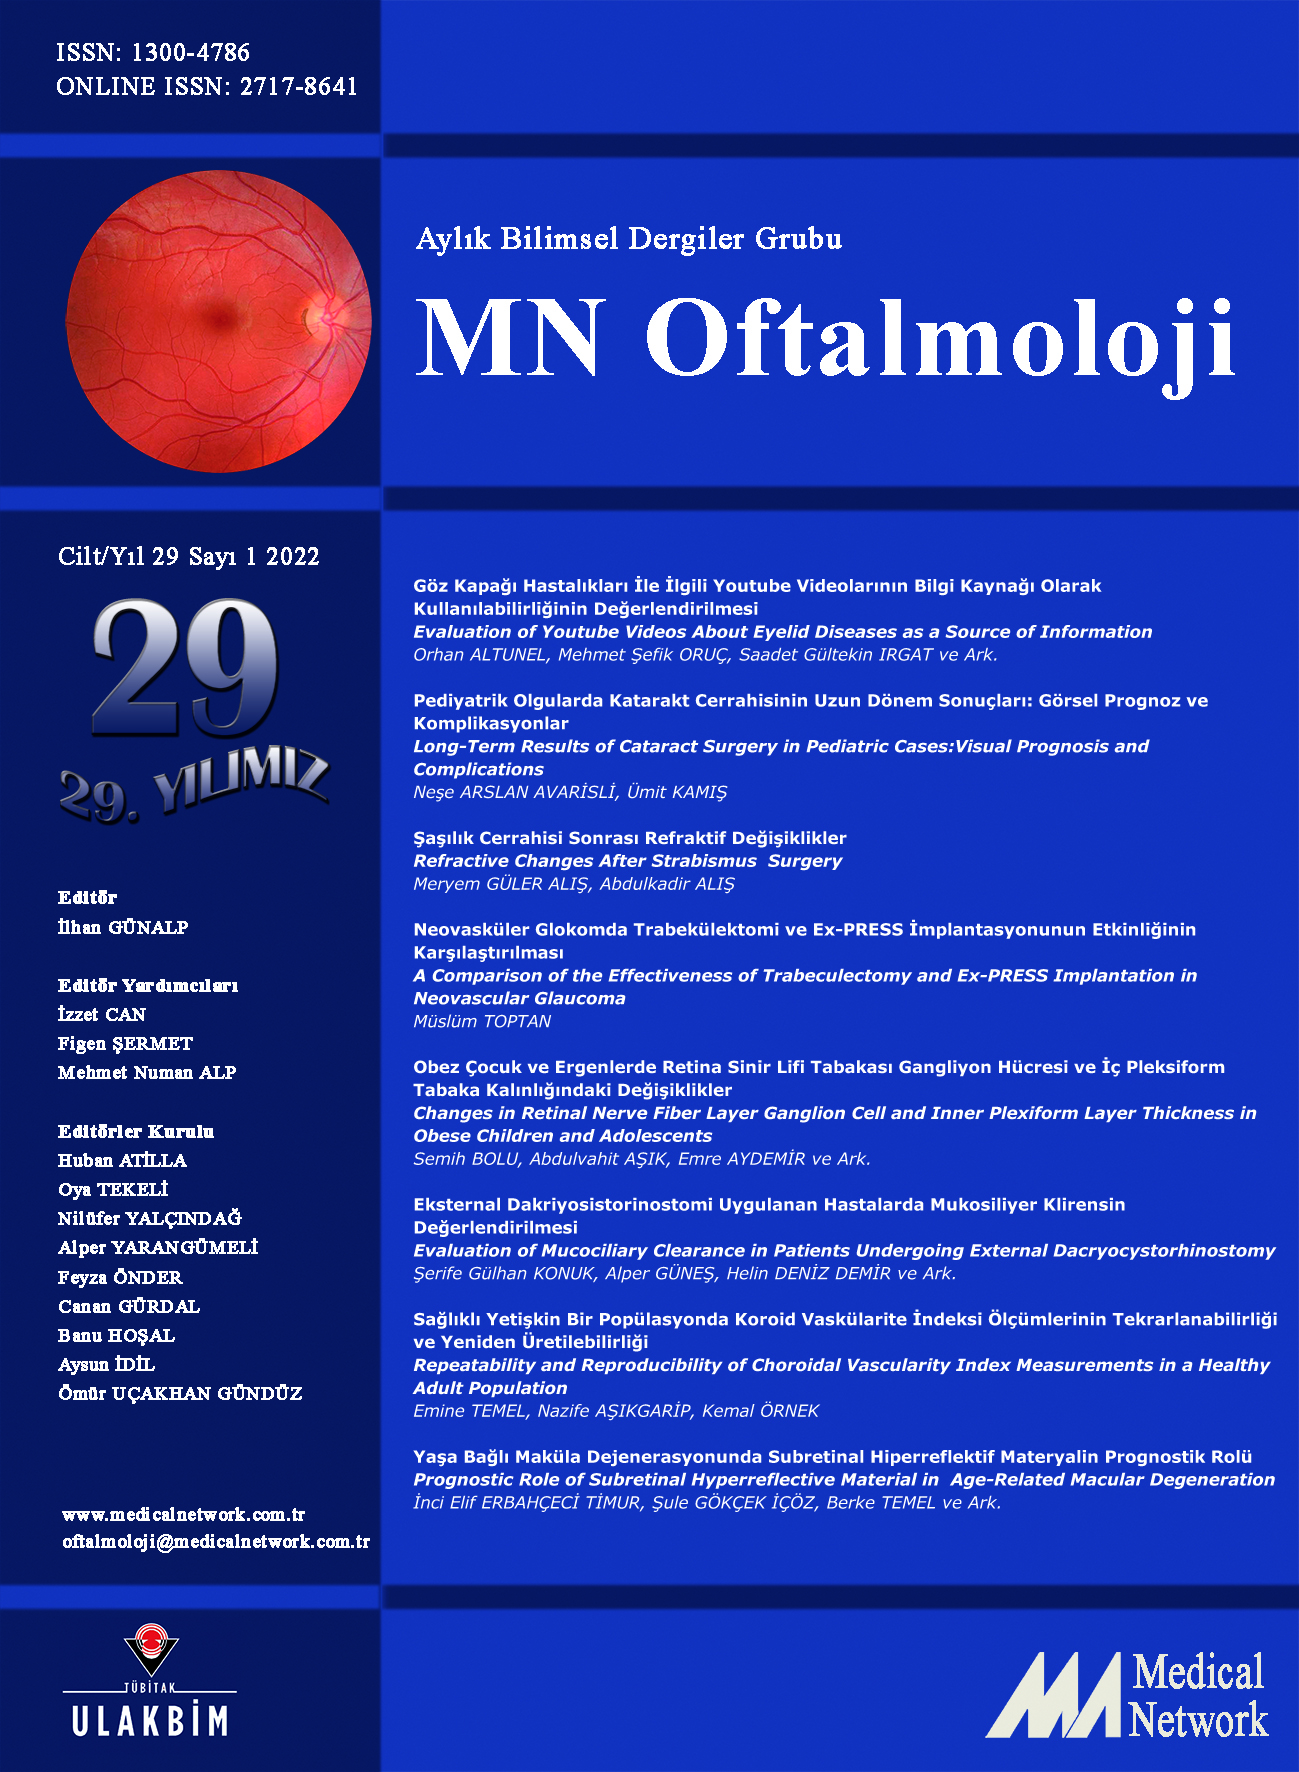 <p>MN Oftalmoloji Cilt: 29 Sayı: 1 2022 (MN Ophthalmology Volume: 29 No: 1 2022)</p>